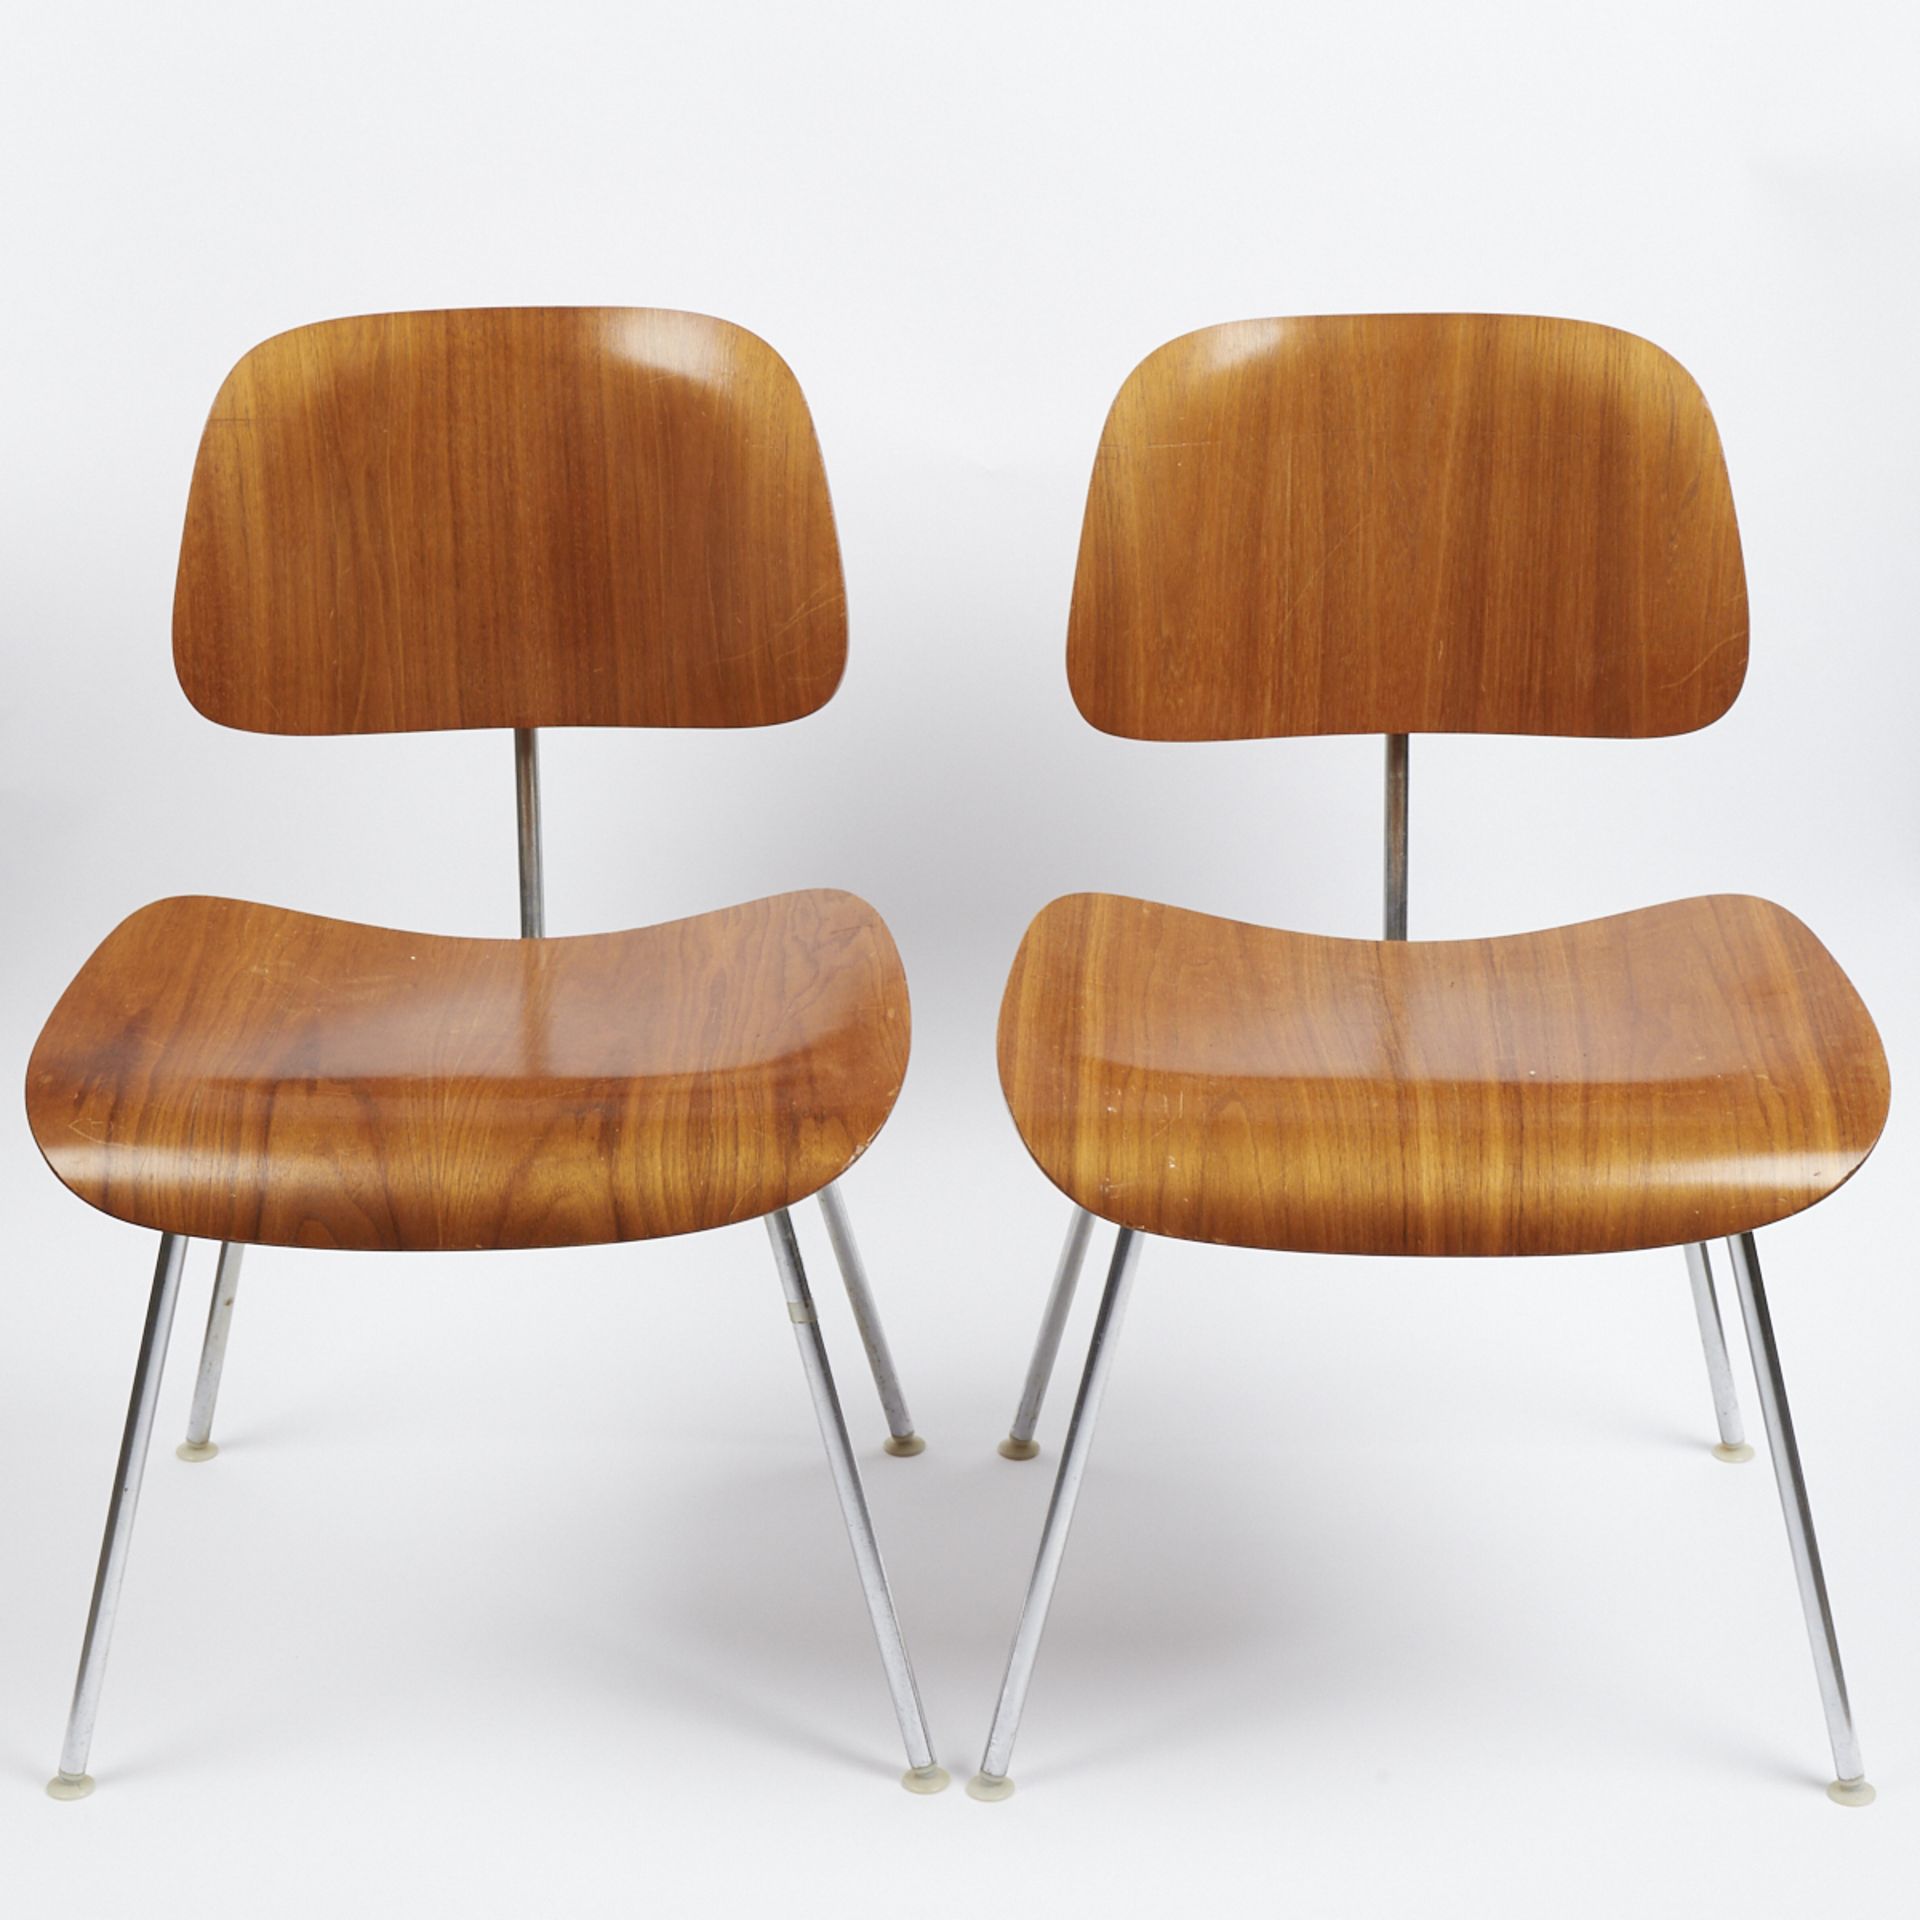 Pair of DCM Eames Herman Miller Chairs